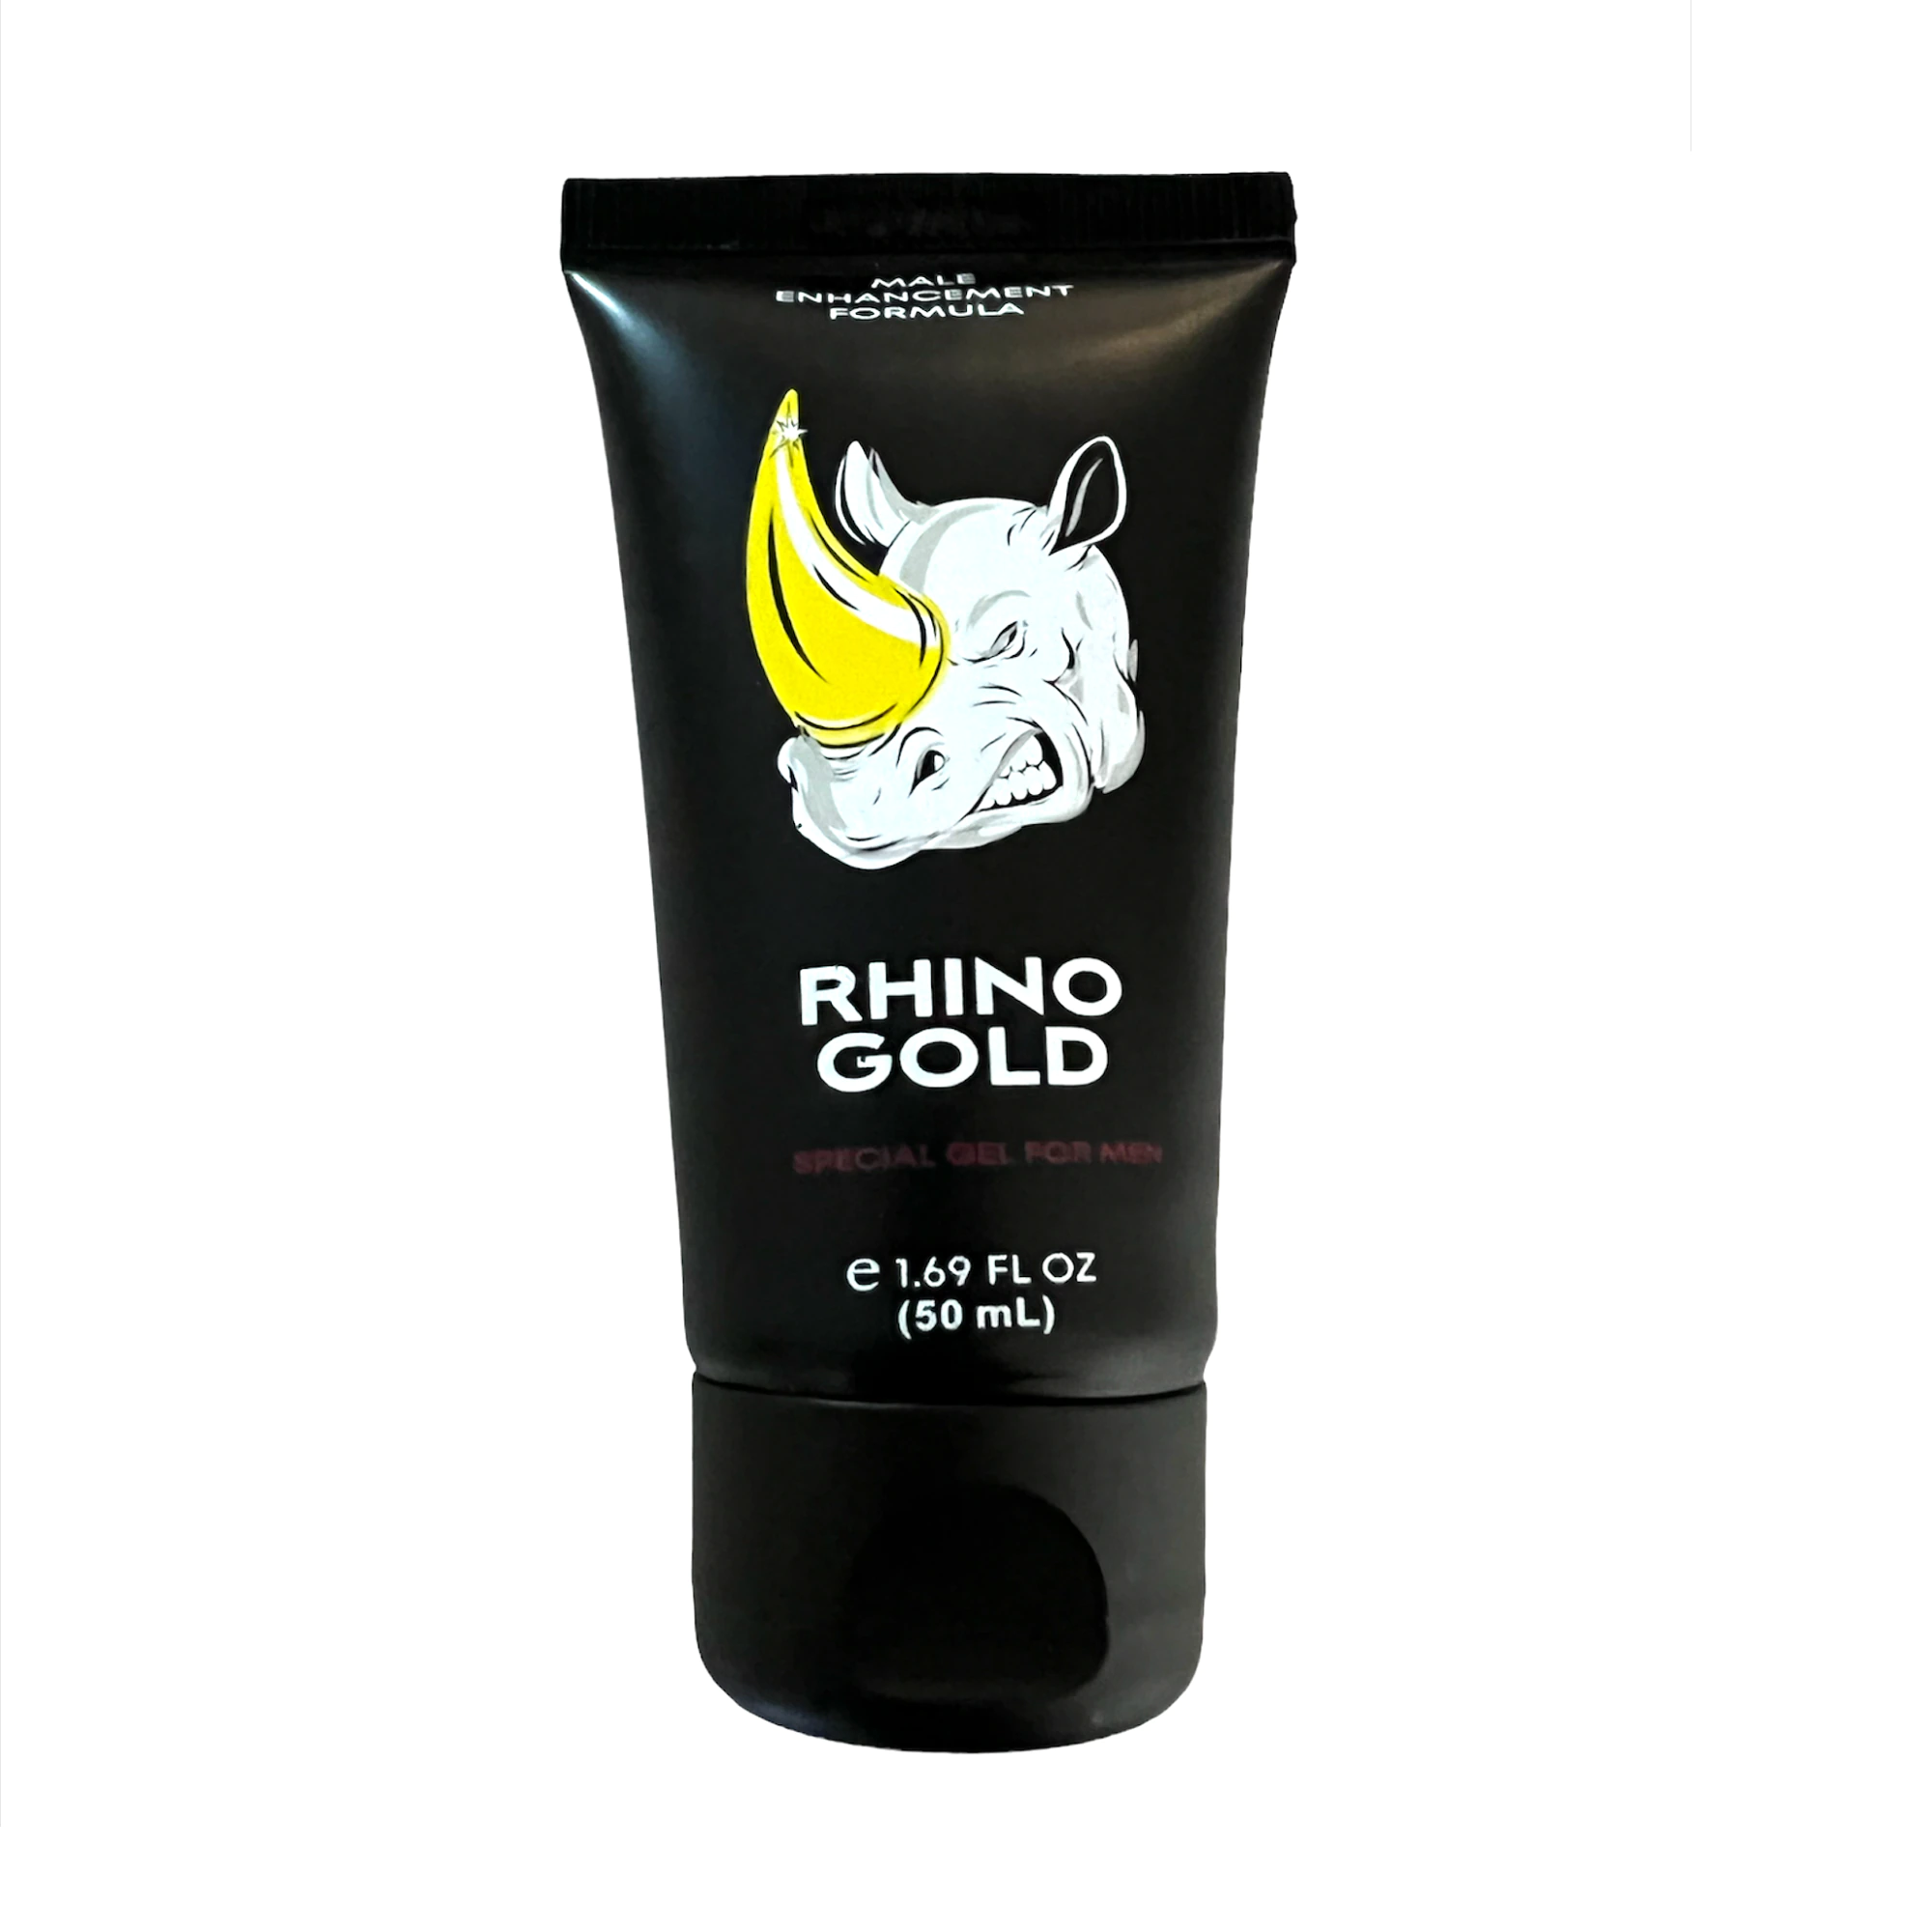 ¿Rhino gold gel para que sirve